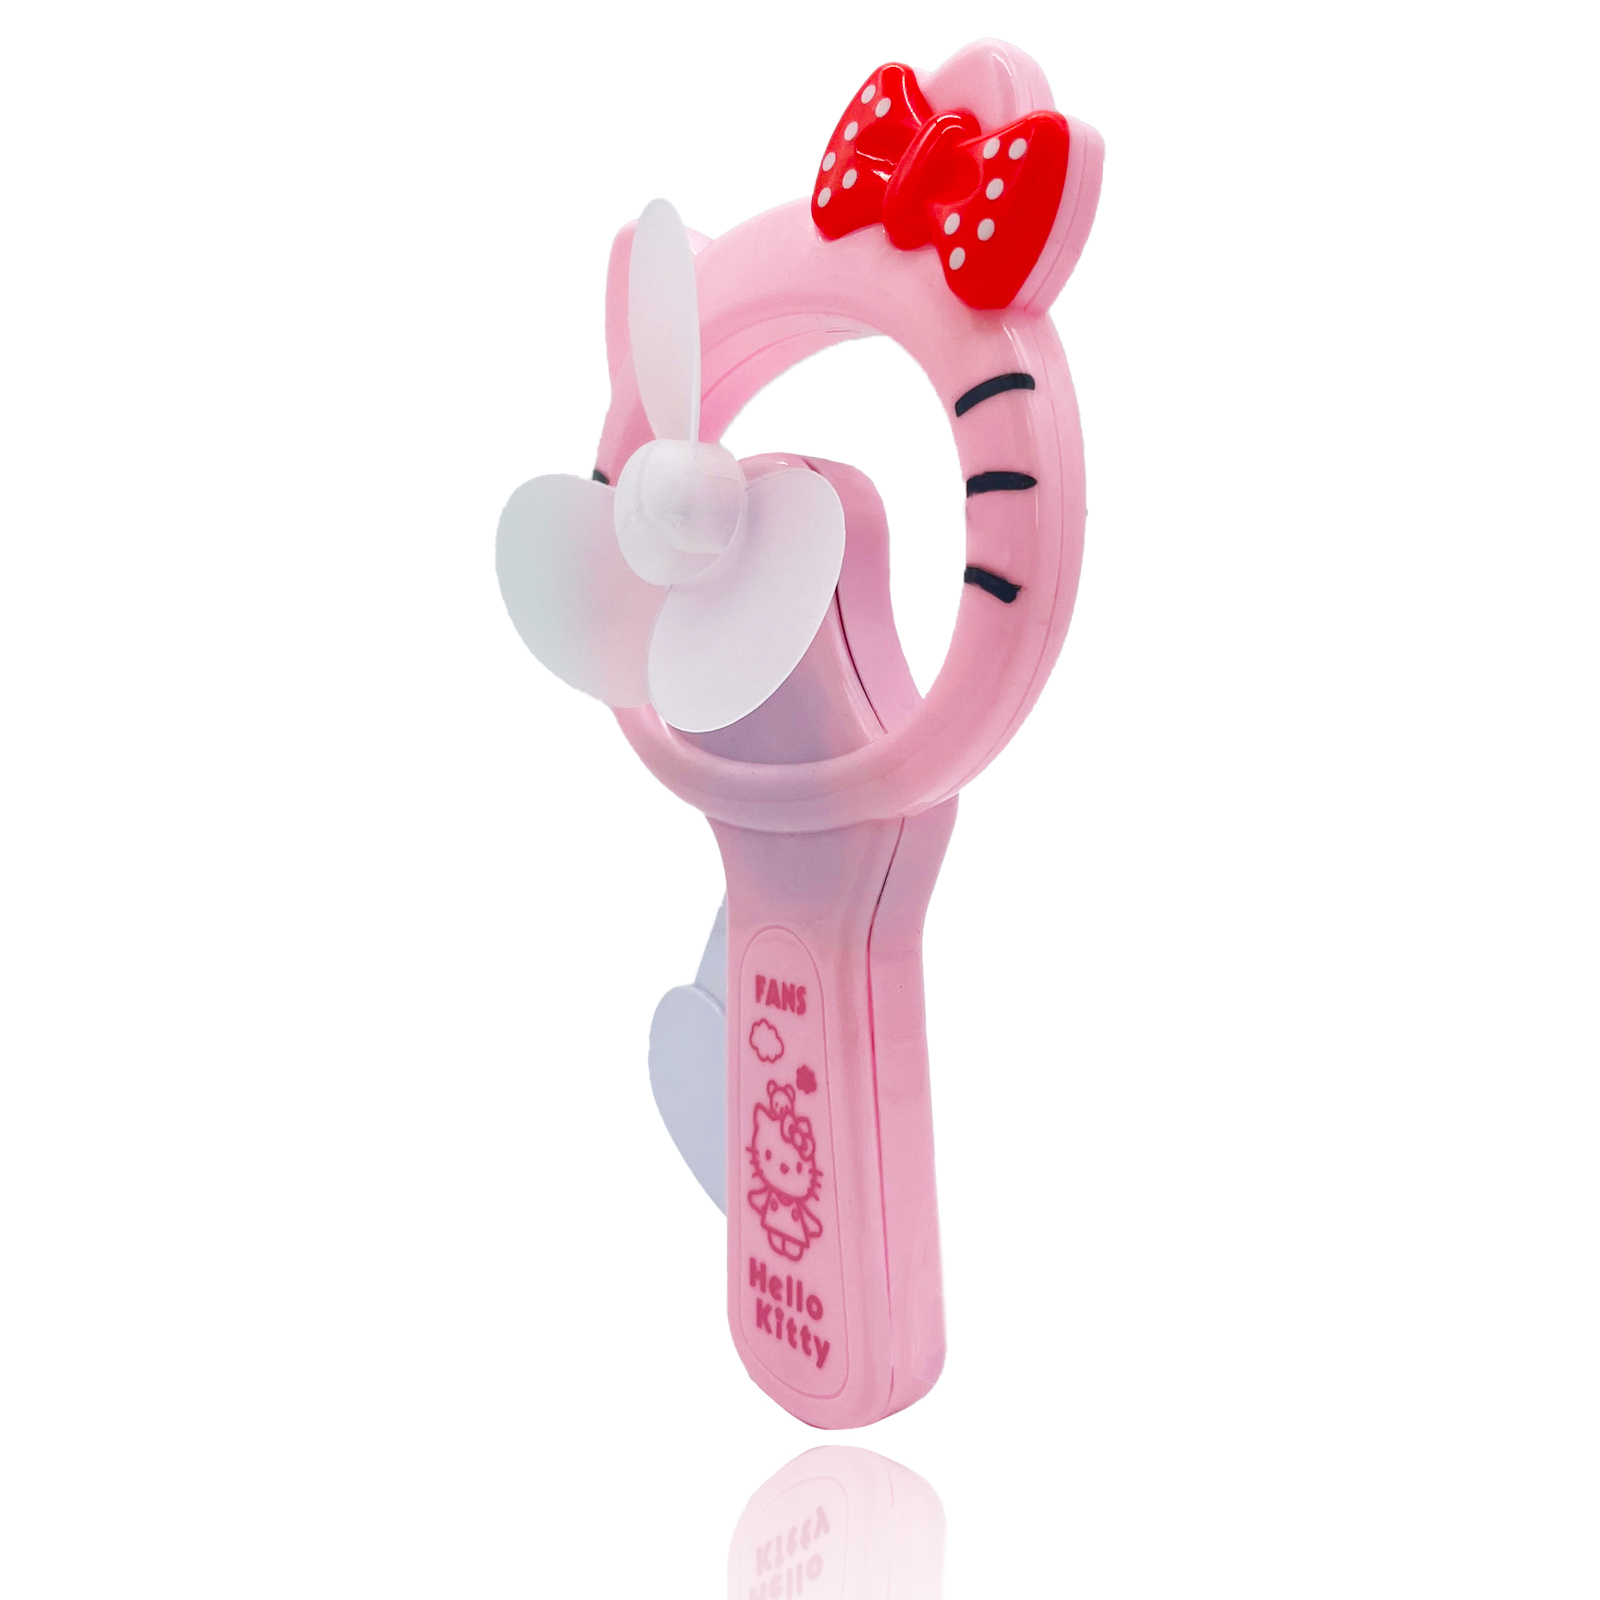 Детский ручной вентилятор Market toys lab с Китти Hello Kitty розовый 20 см